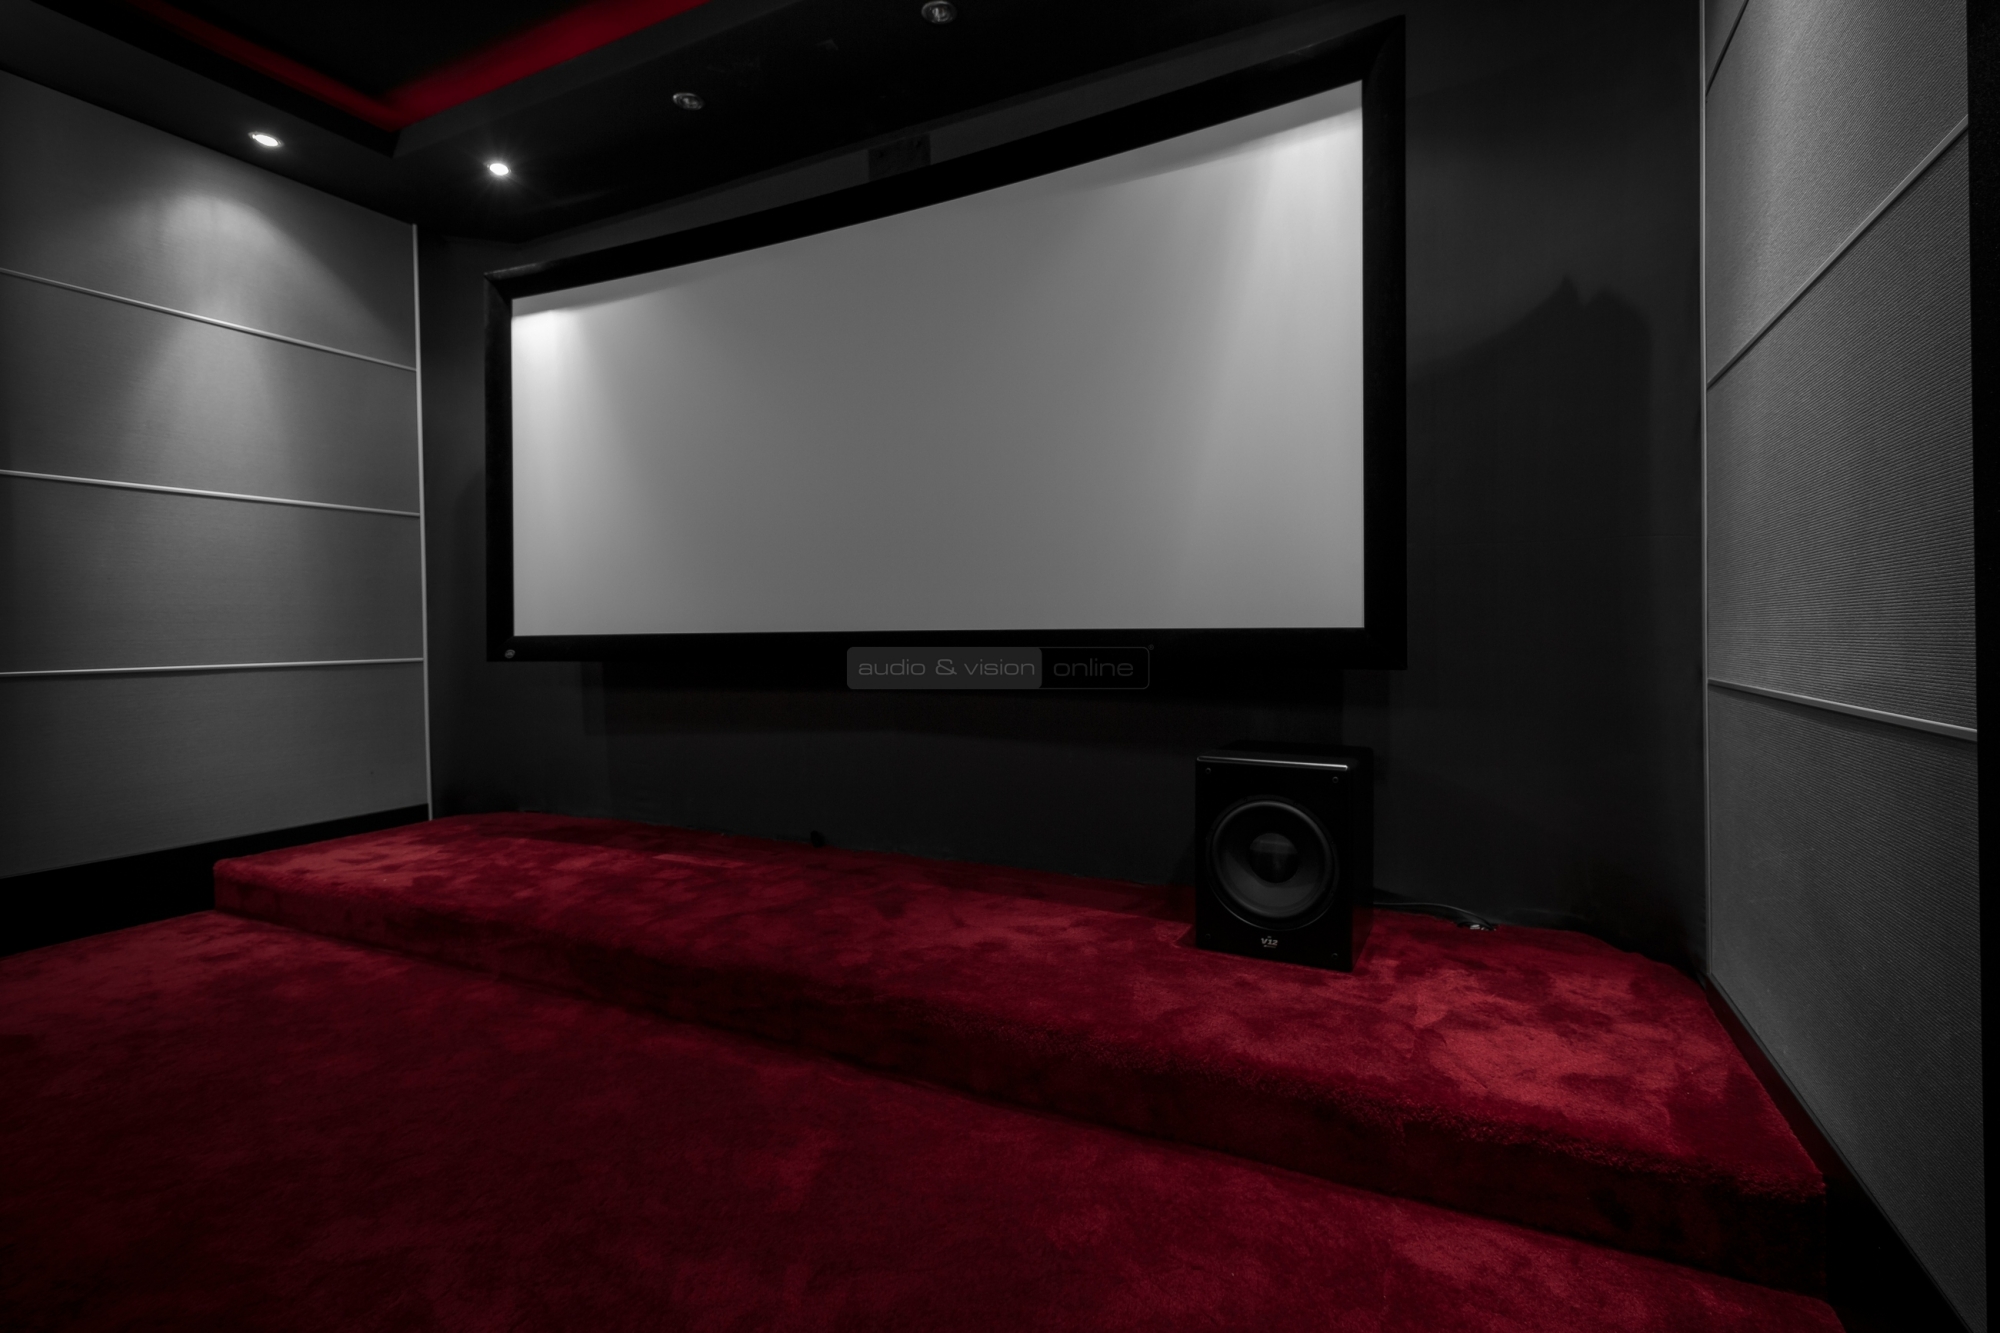 Screen Excellence projektor vászon a Home Movie-nál